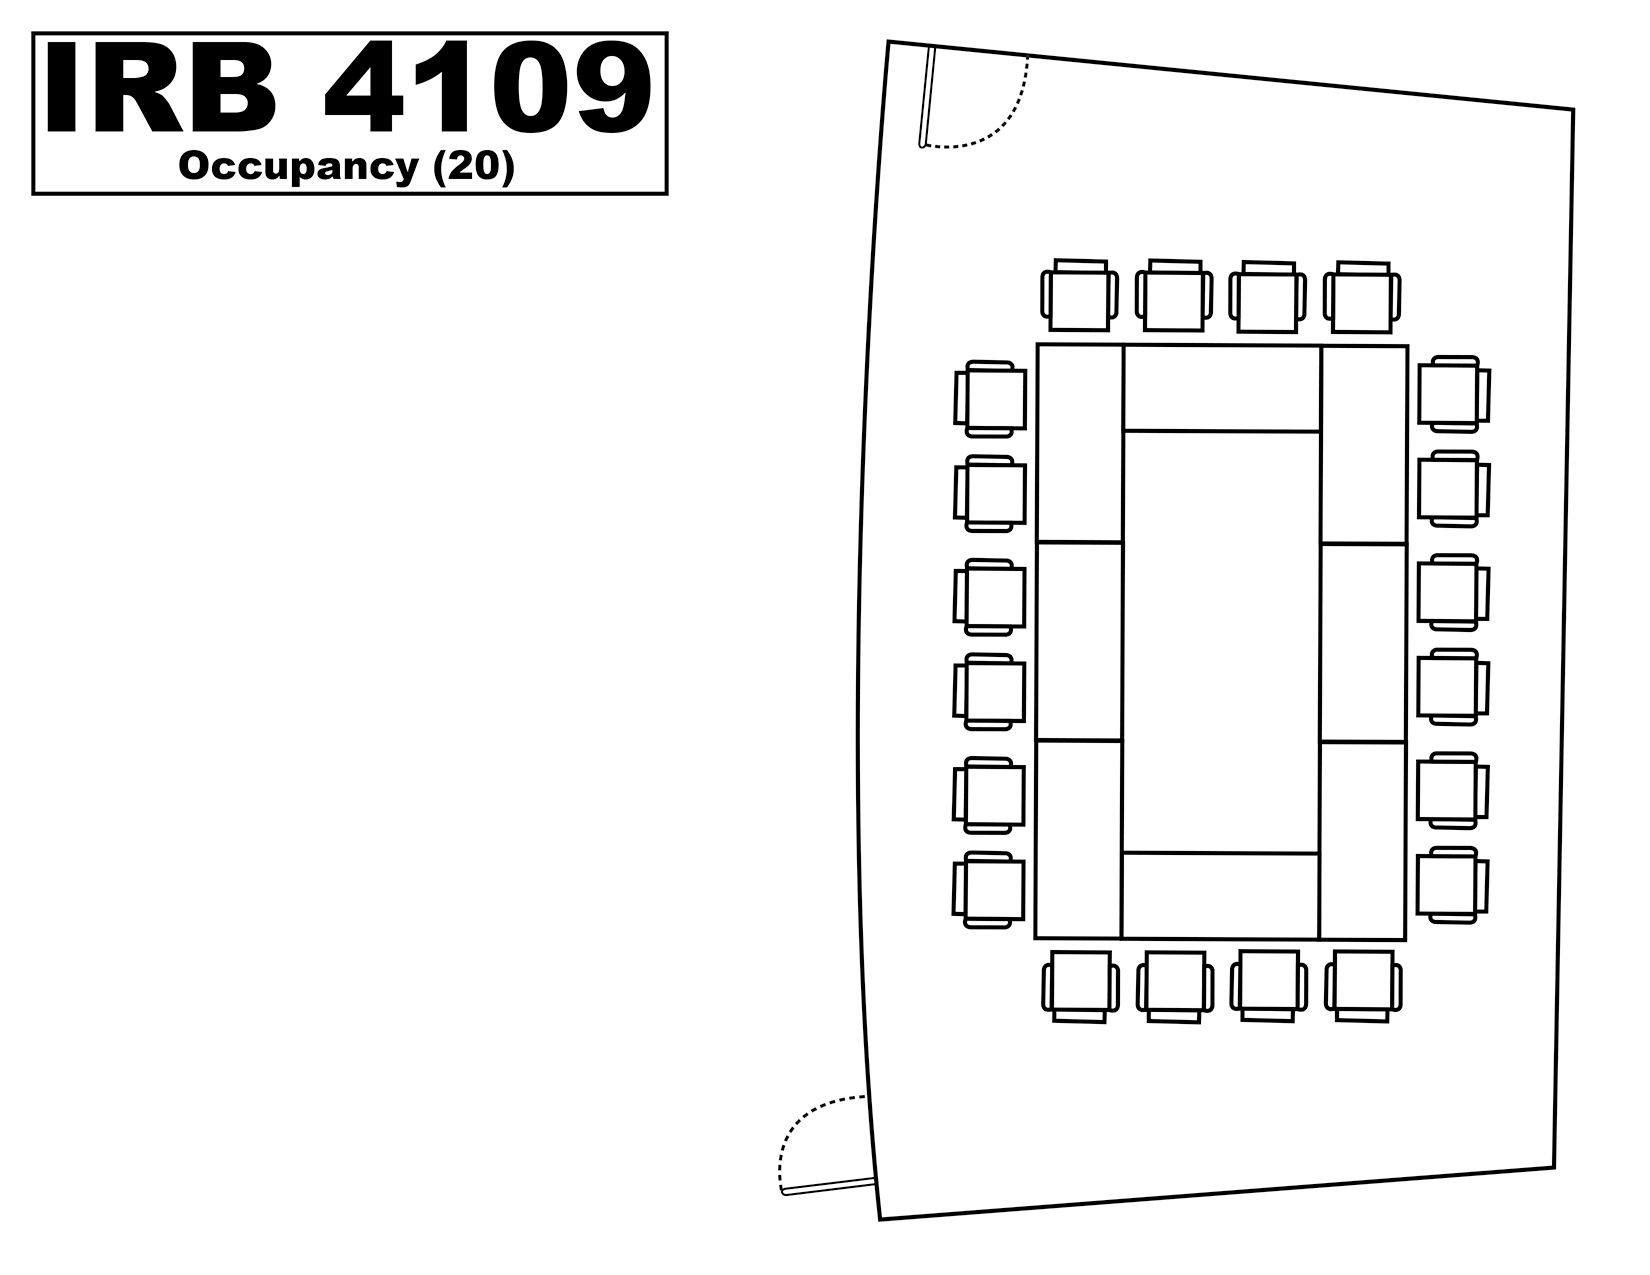 IRB4109 floorplan